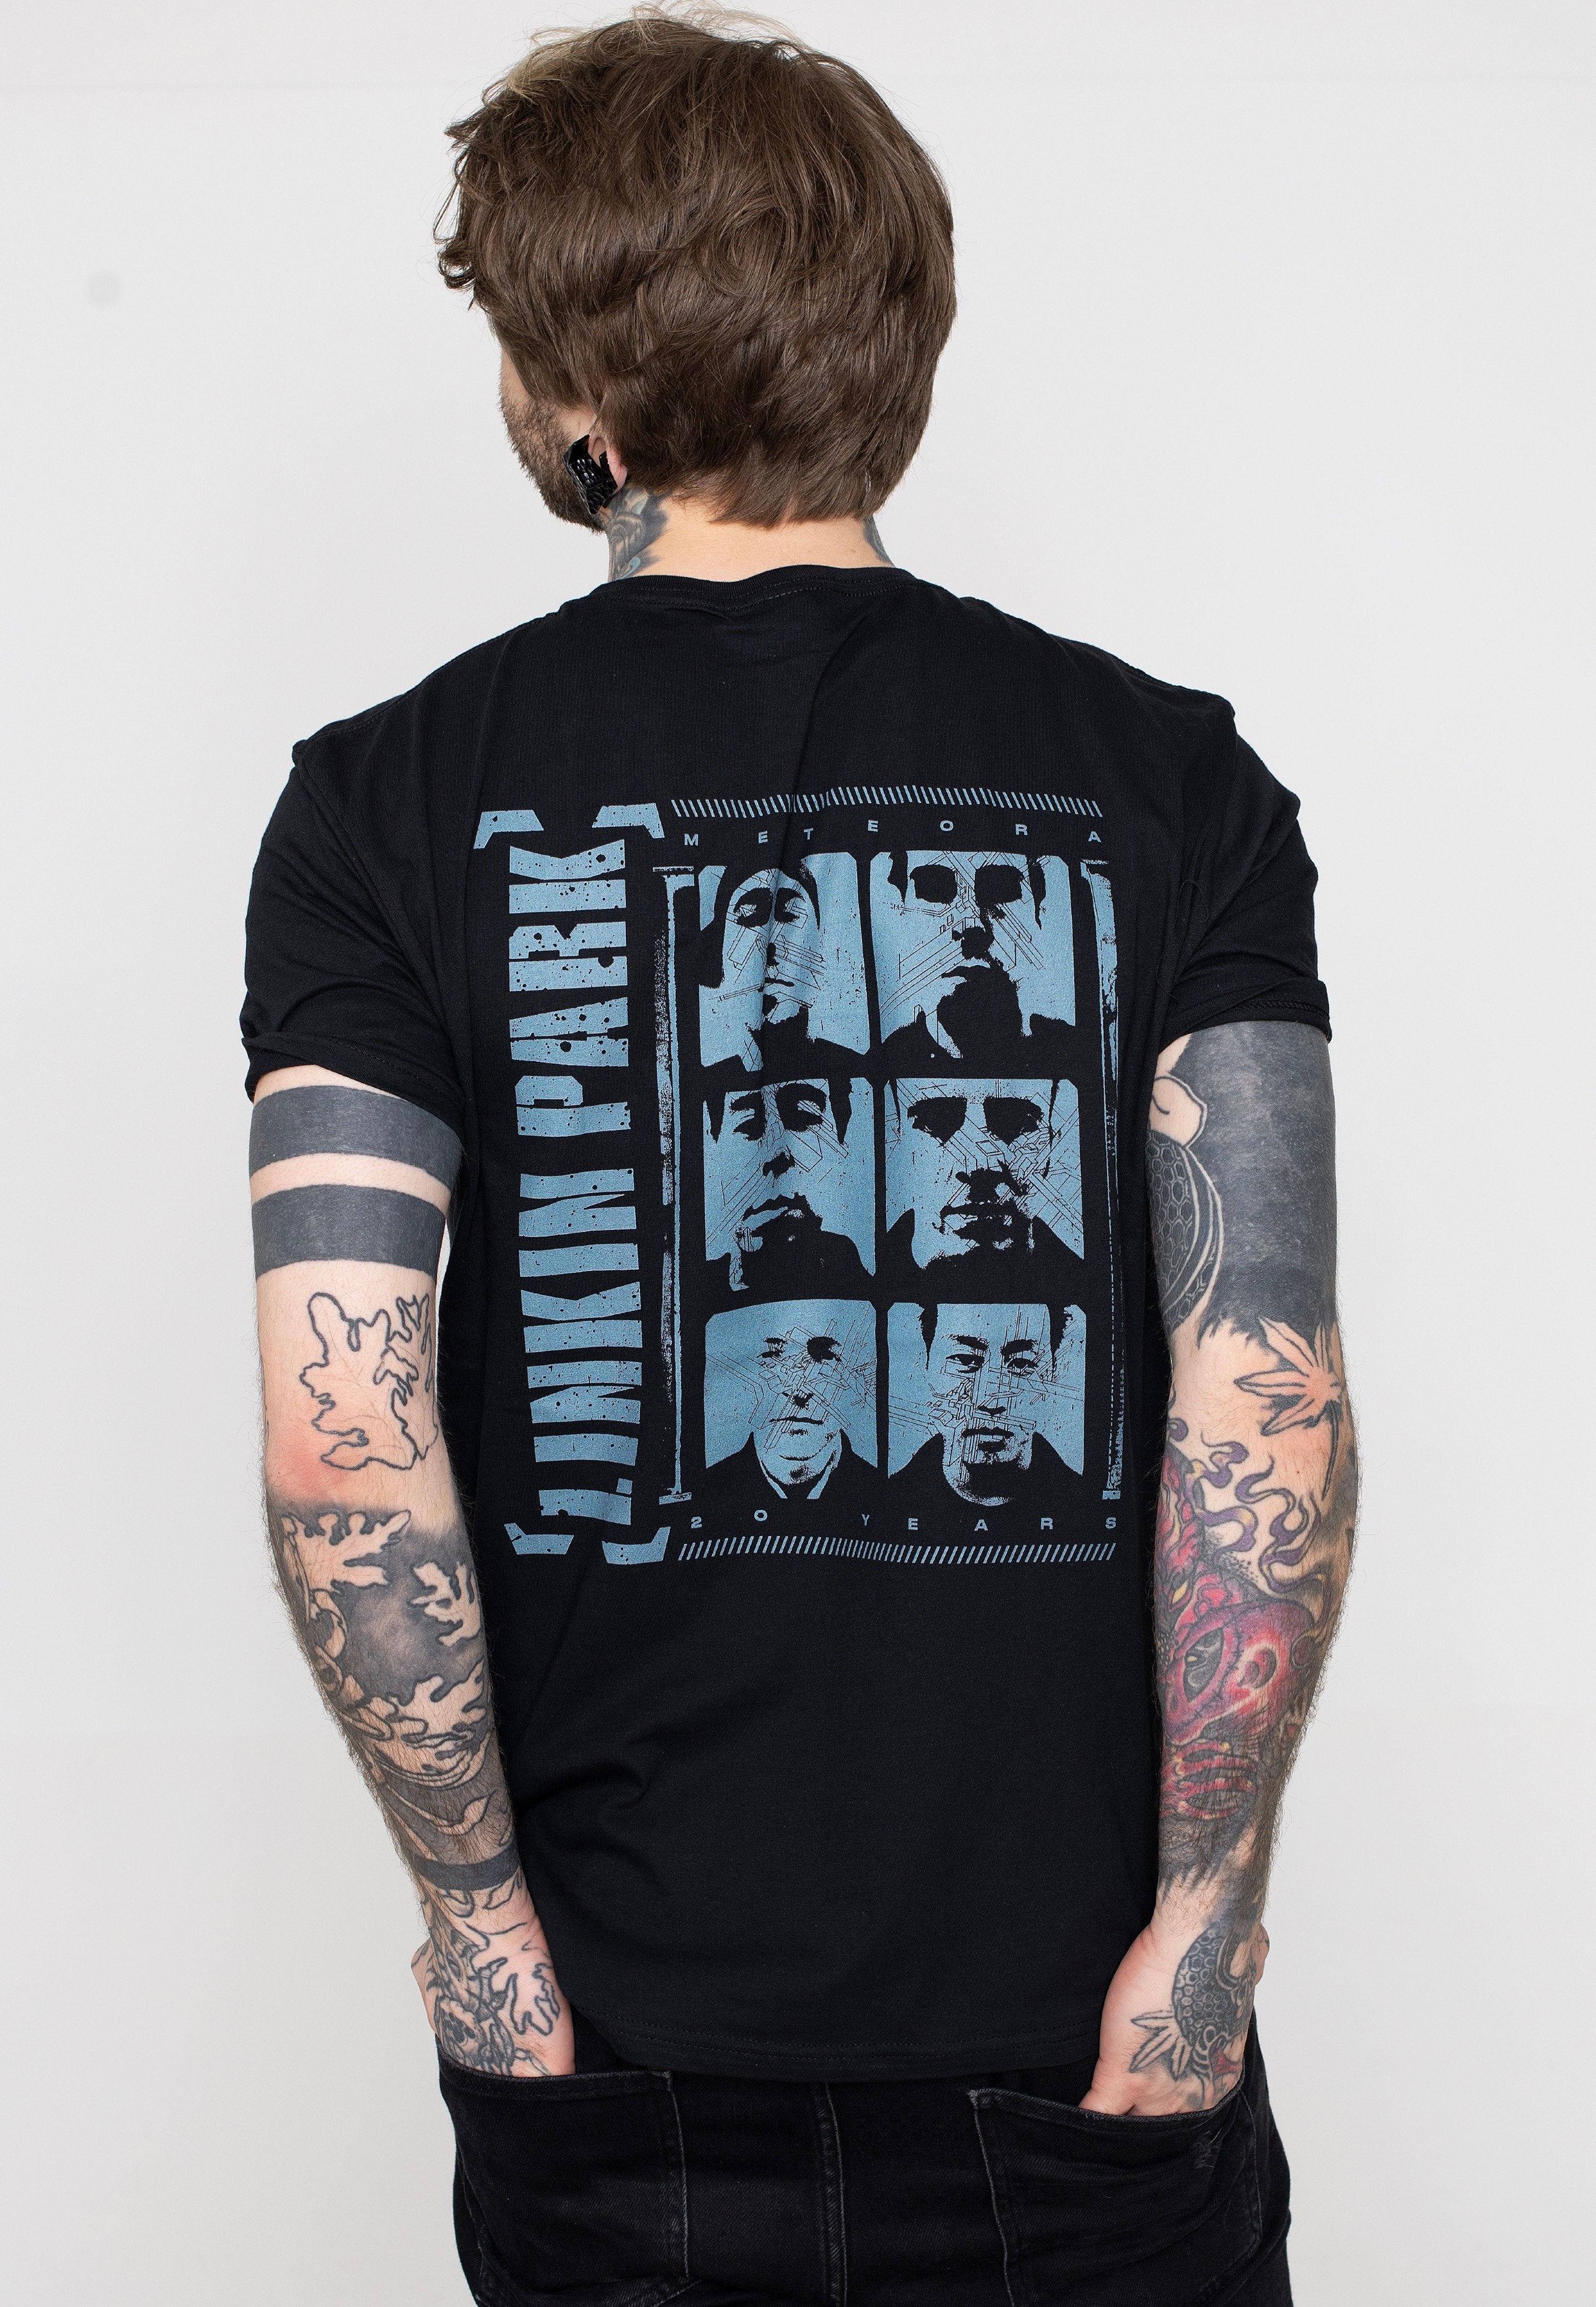 Linkin Park - Meteora Portraits - T-Shirt